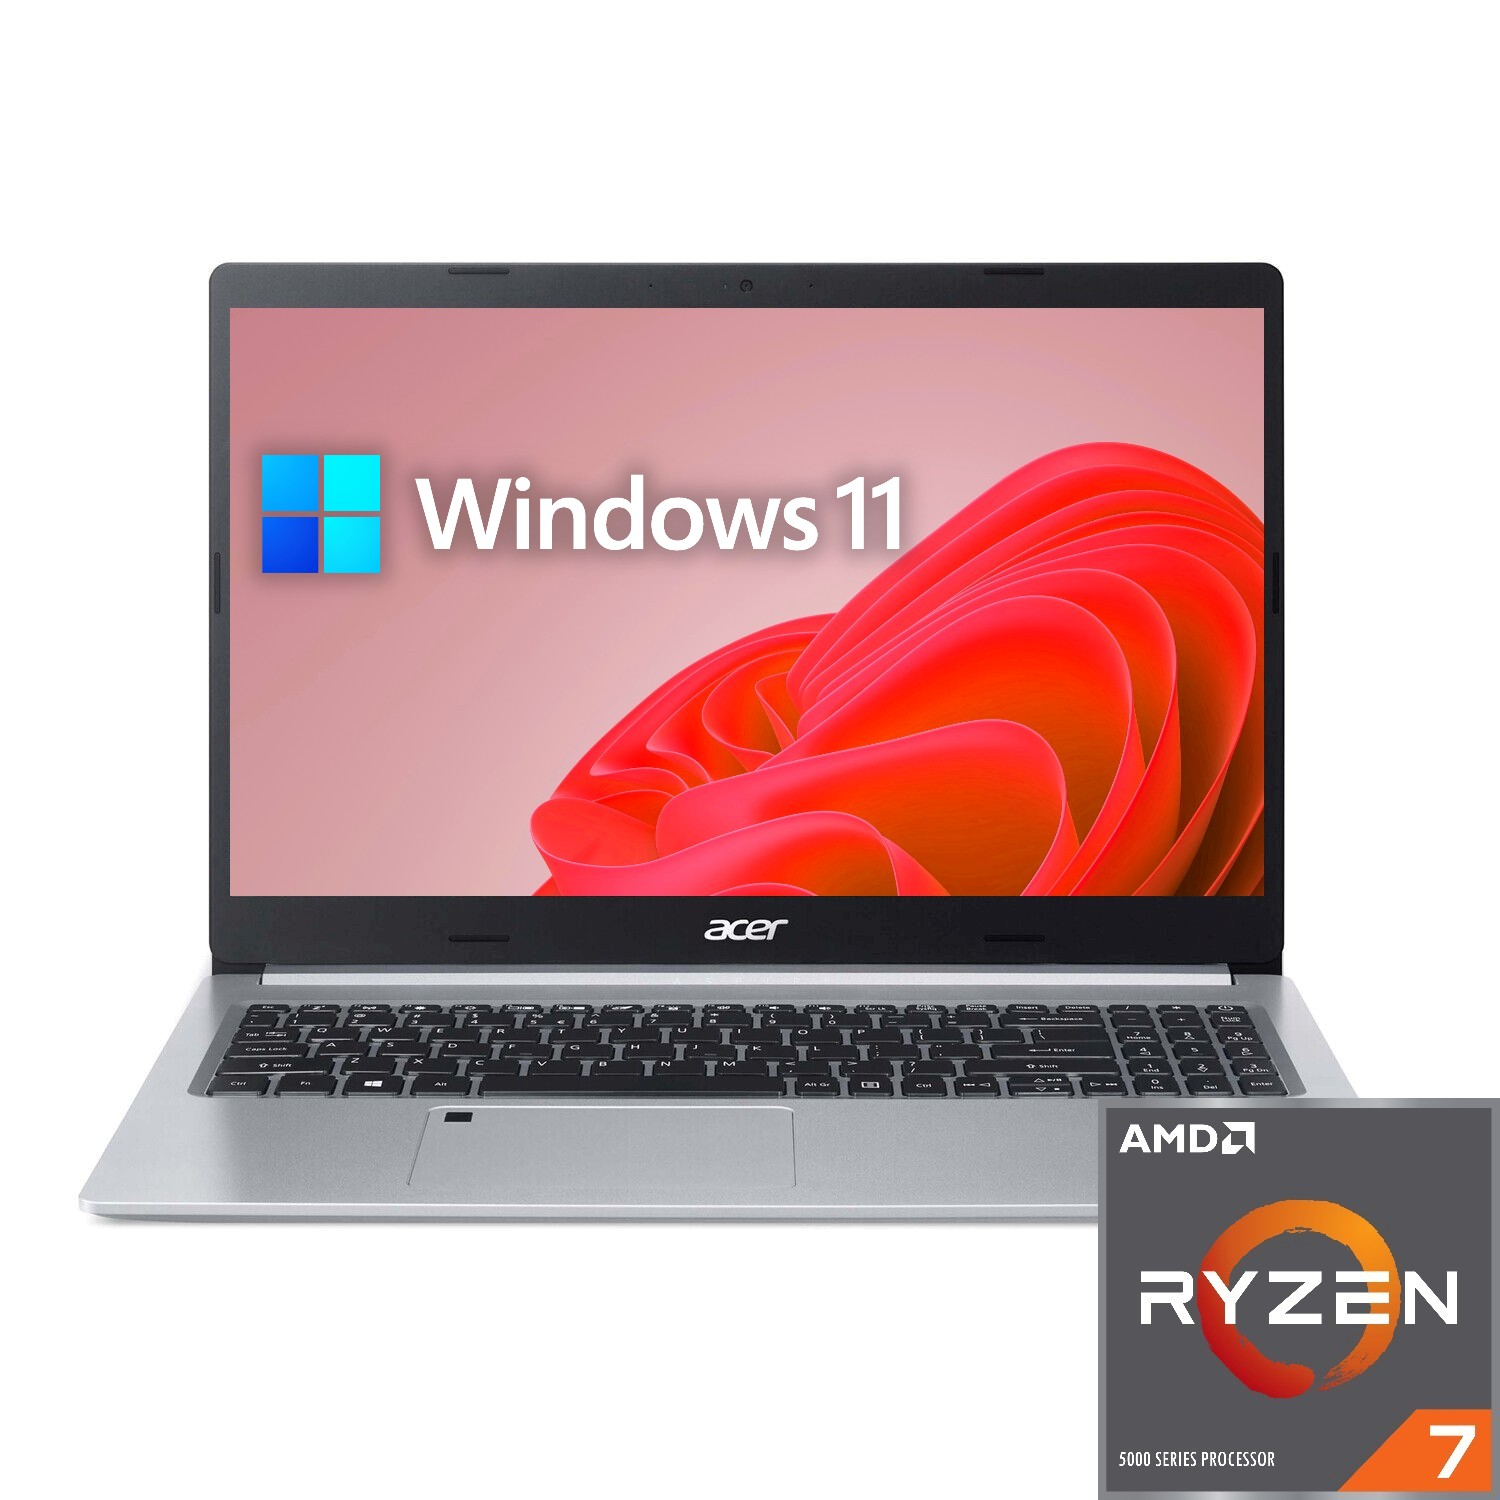 ACER Aspire A515-R7, mit Ryzen™ Tastaturbeleuchtung, GB RAM, Notebook 7 Silber Display, AMD Prozessor, 500 Zoll 8 SSD, 15,6 GB